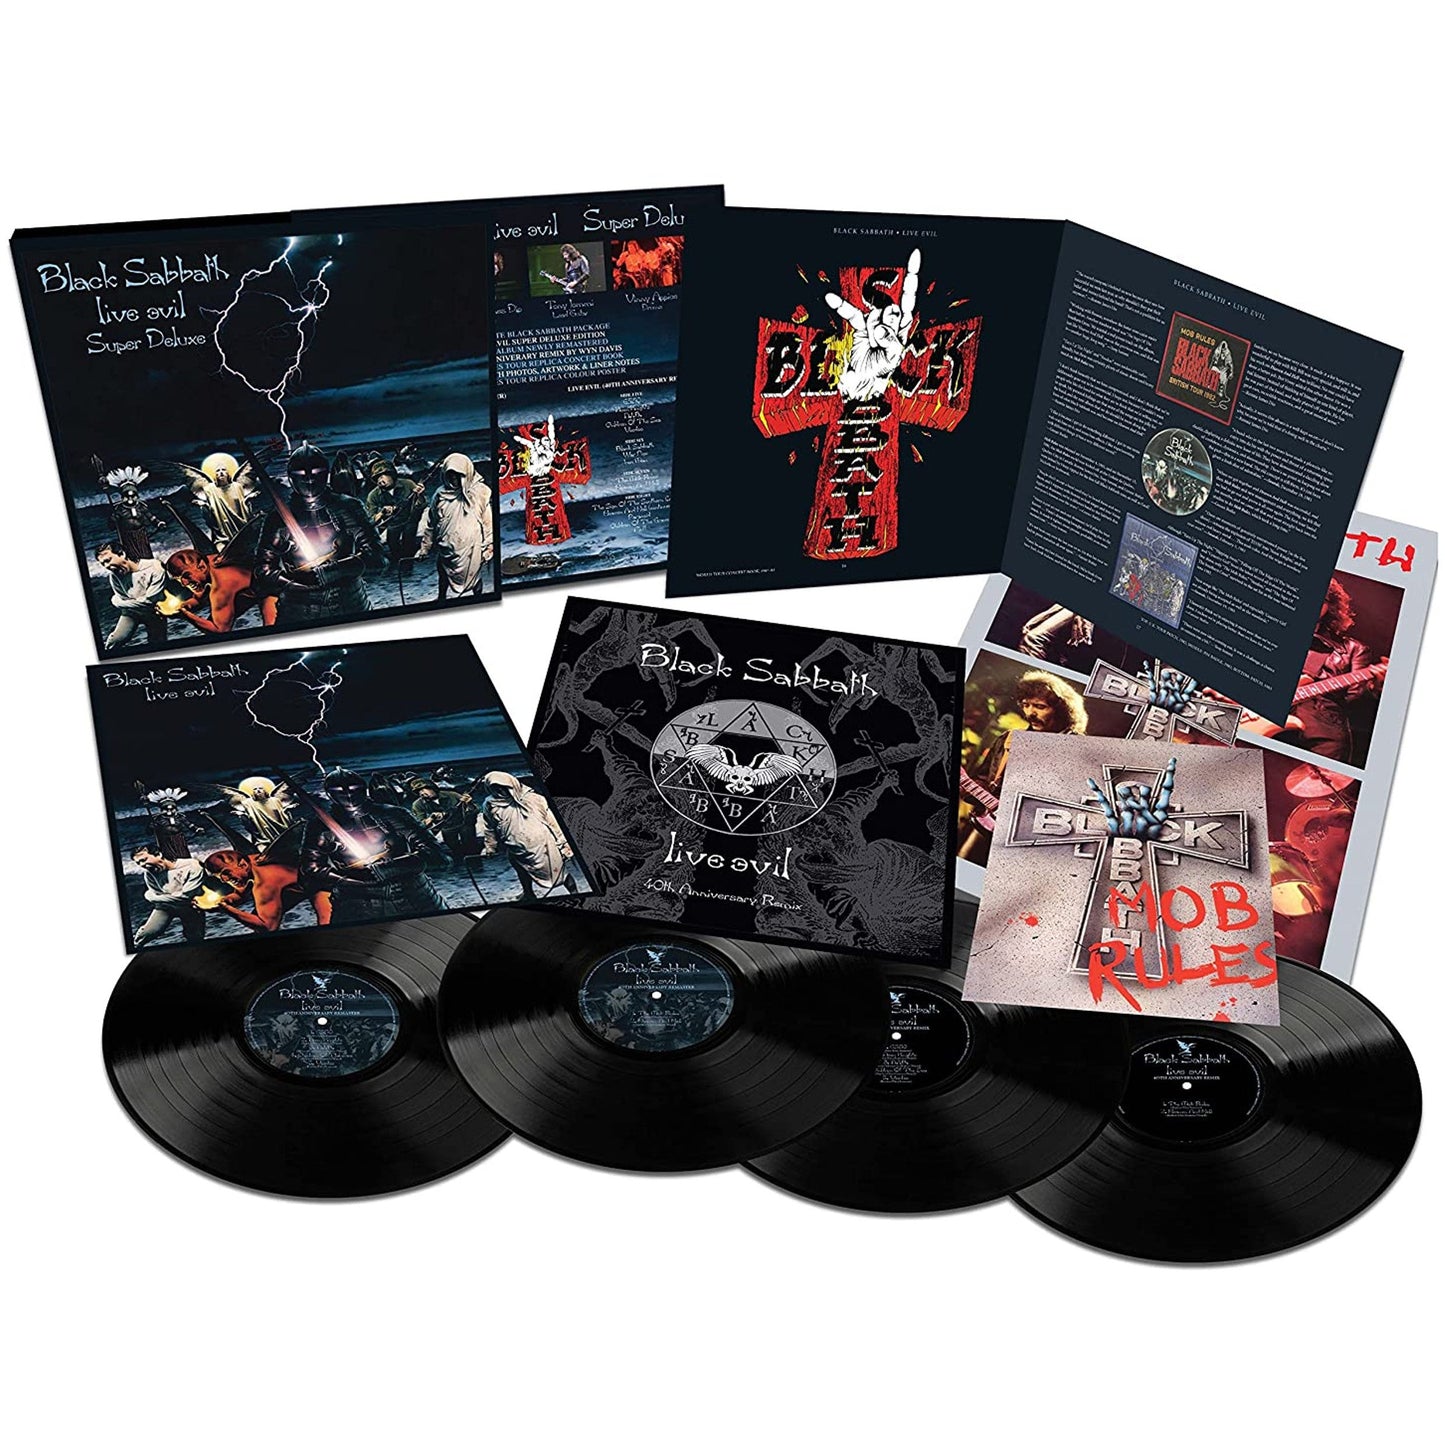 Black Sabbath - Live Evil (40th Anniversary Super Deluxe) - Boxed Set LP